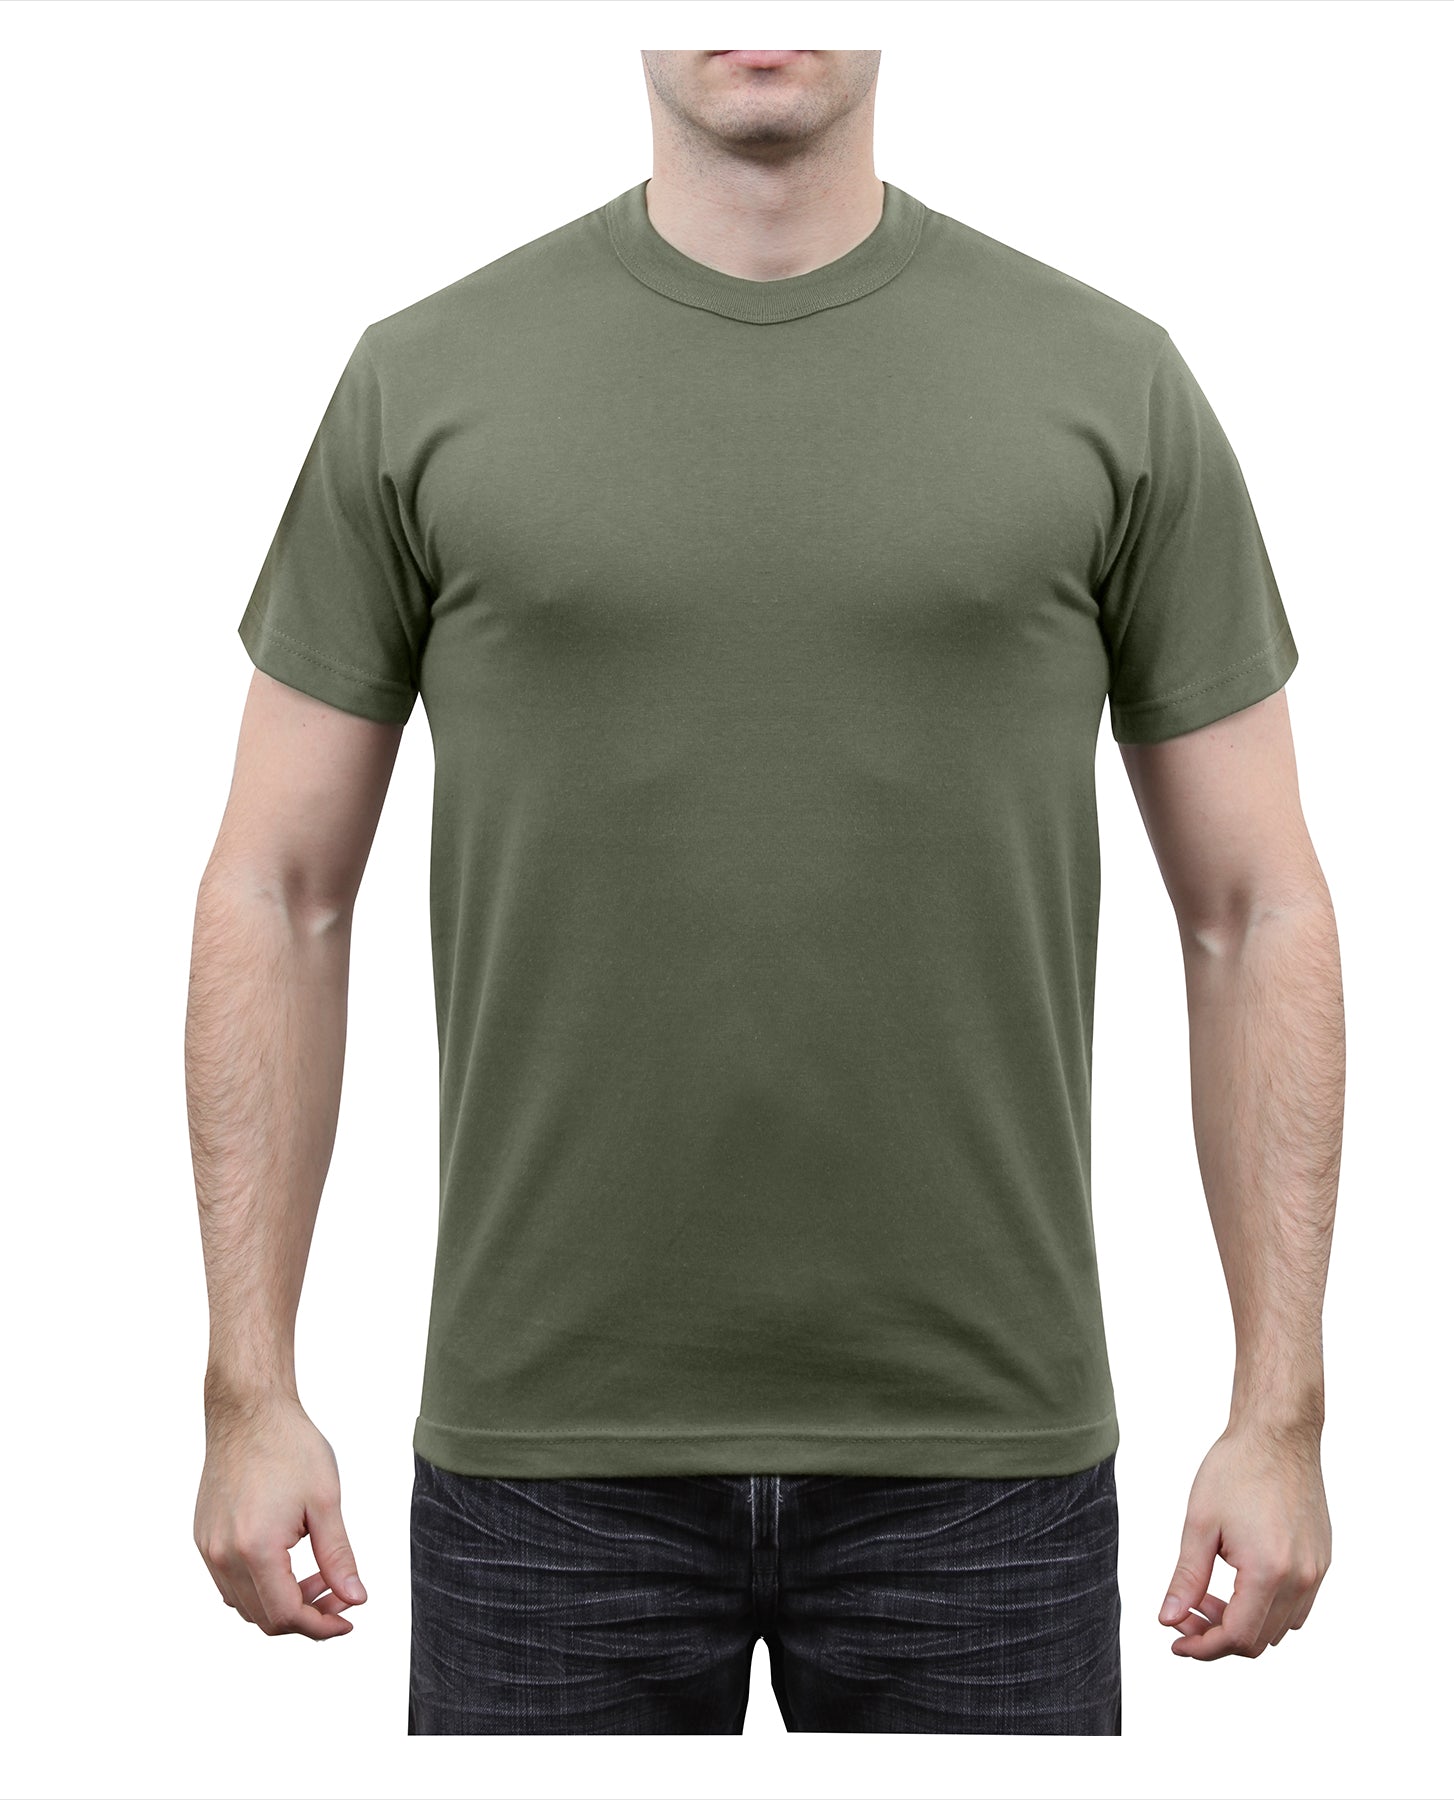 [AR 670-1][Military] Cotton T-Shirts Foliage Green